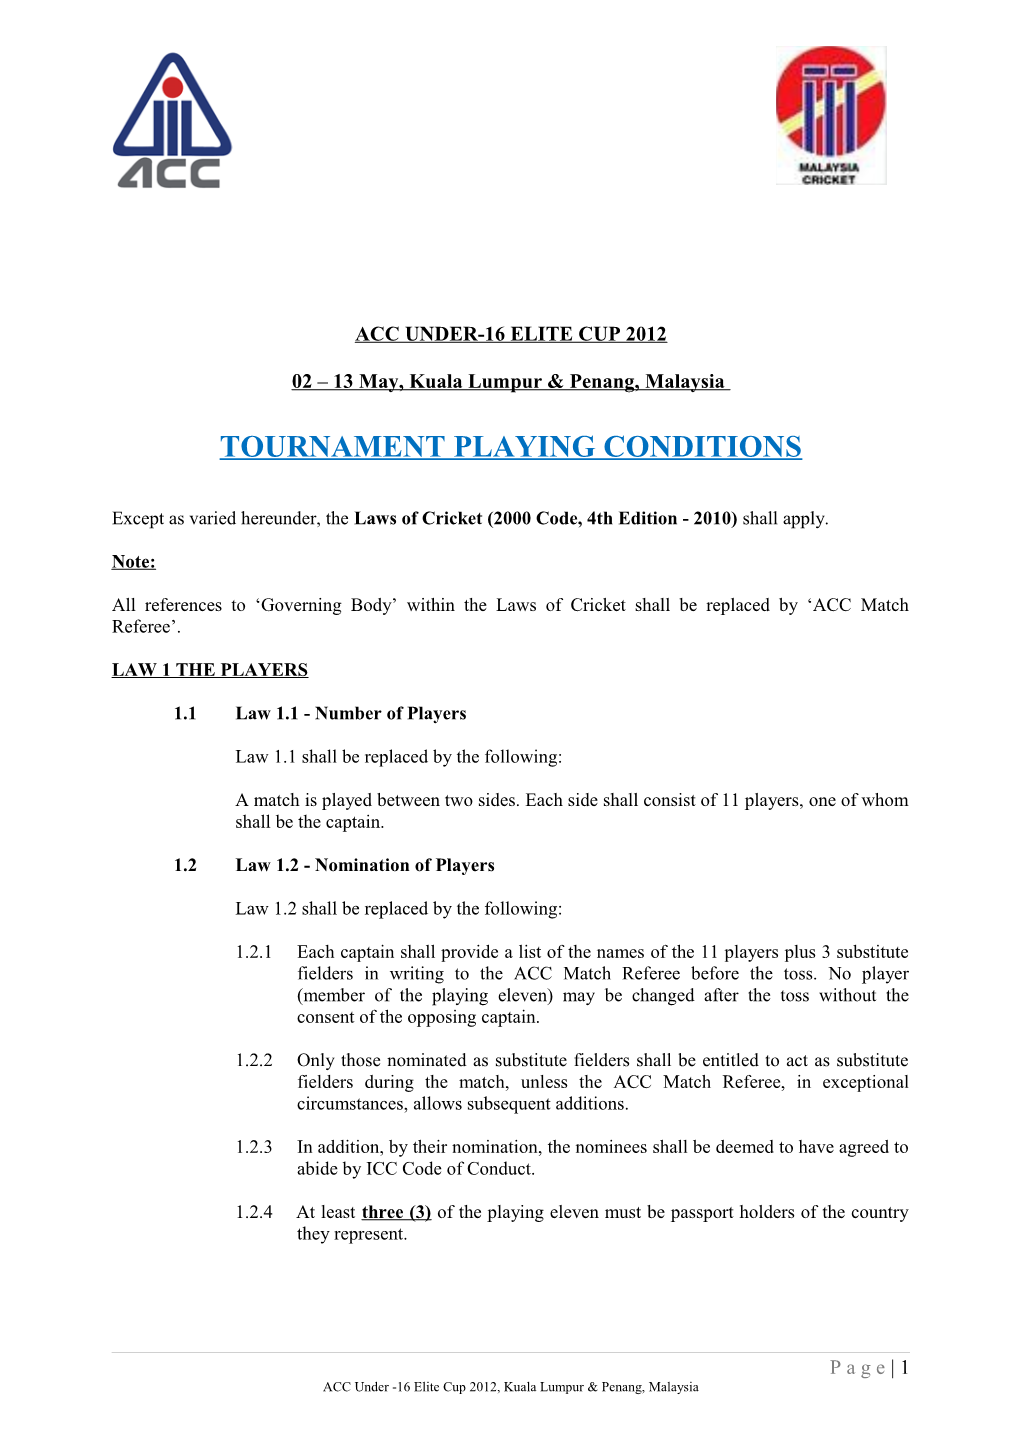 ICC World Twenty20 Playing Conditions 2007